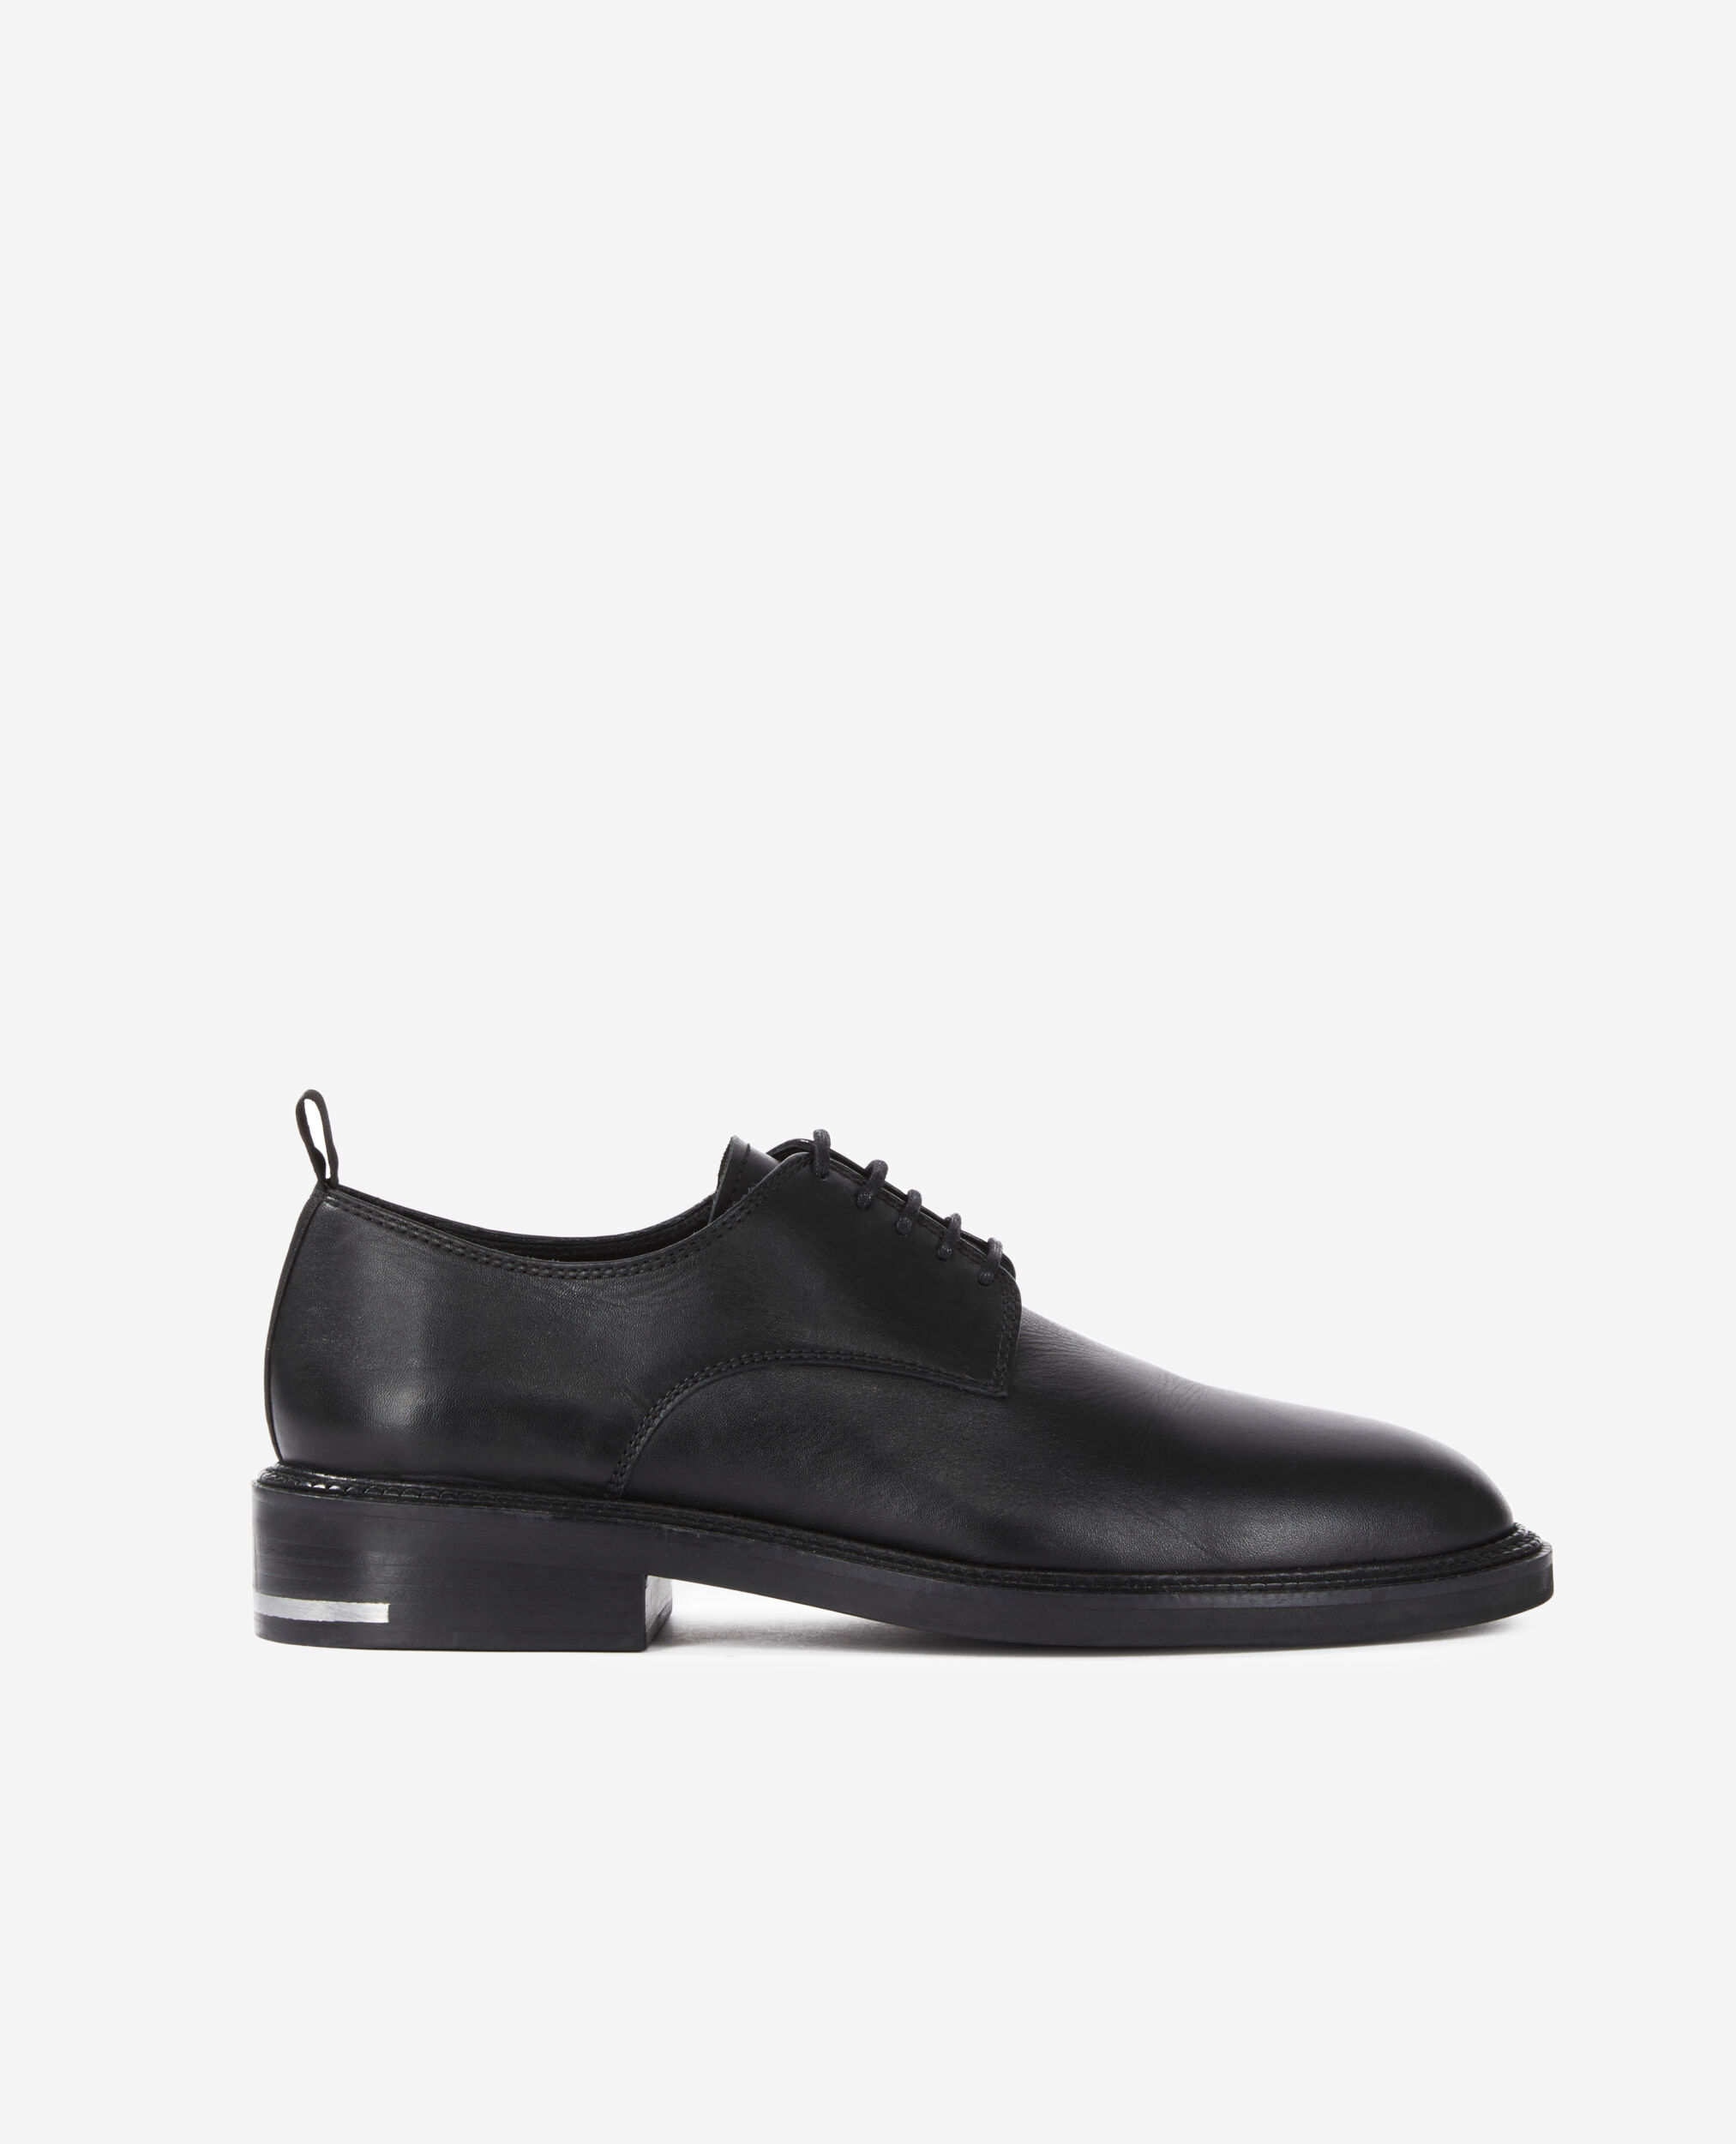 Black leather lace-up shoes, BLACK, hi-res image number null